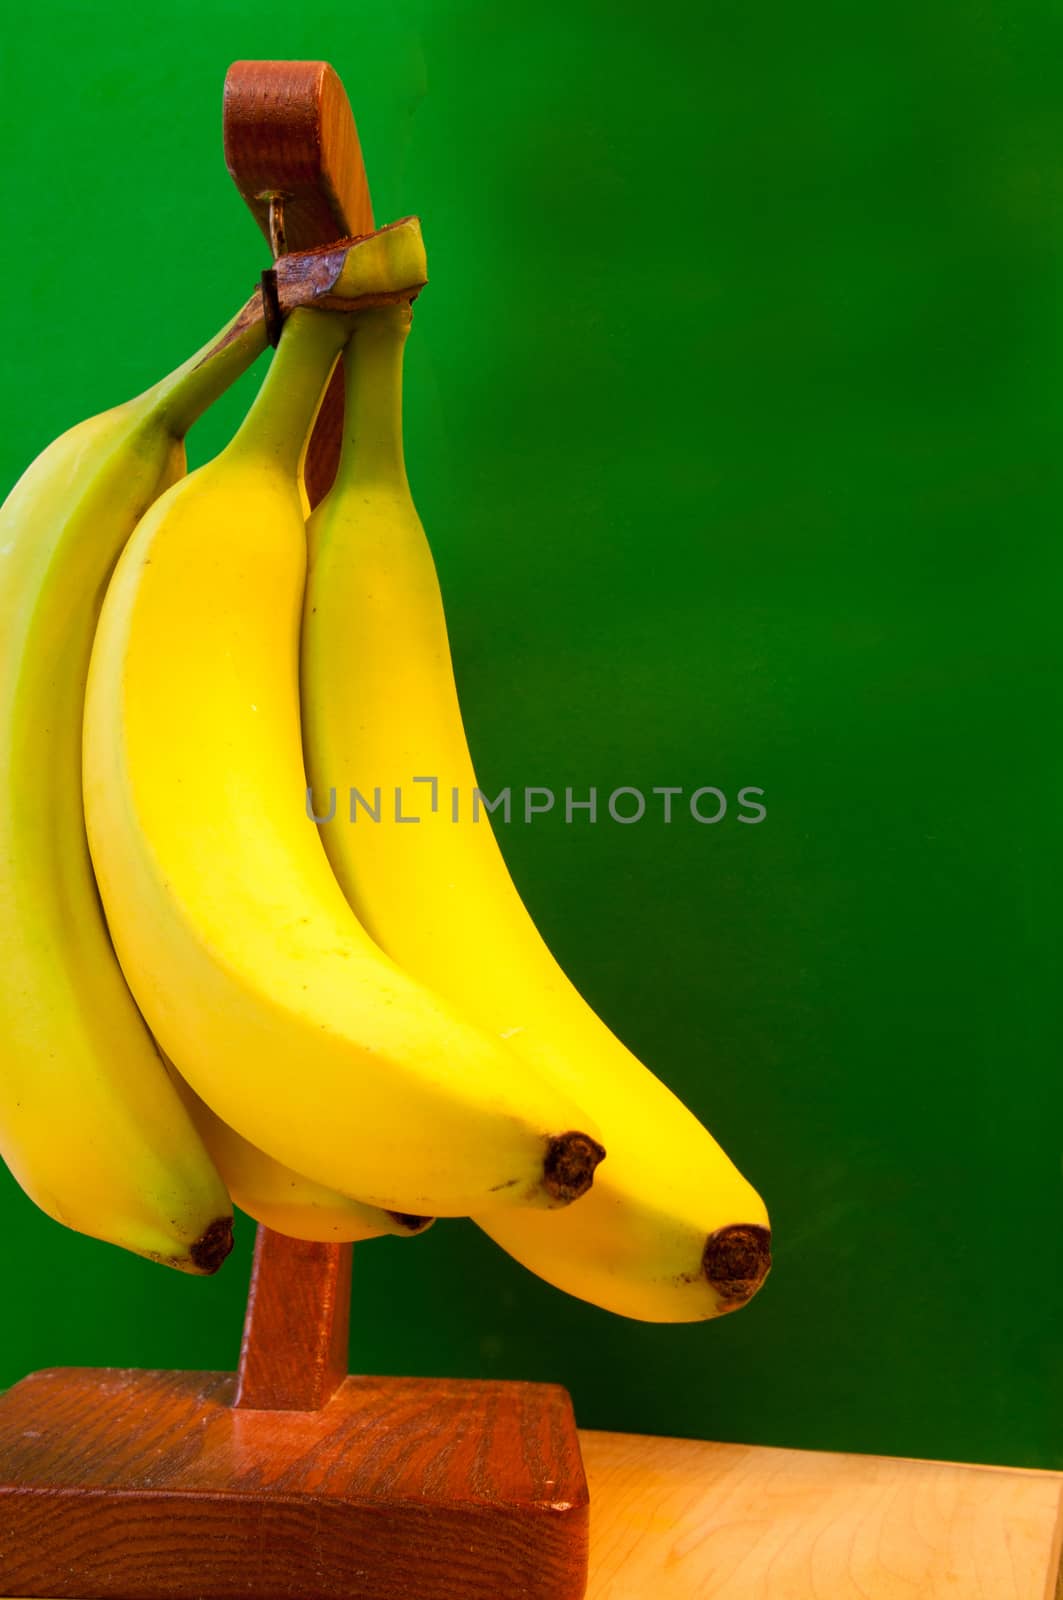 Bananas by edcorey